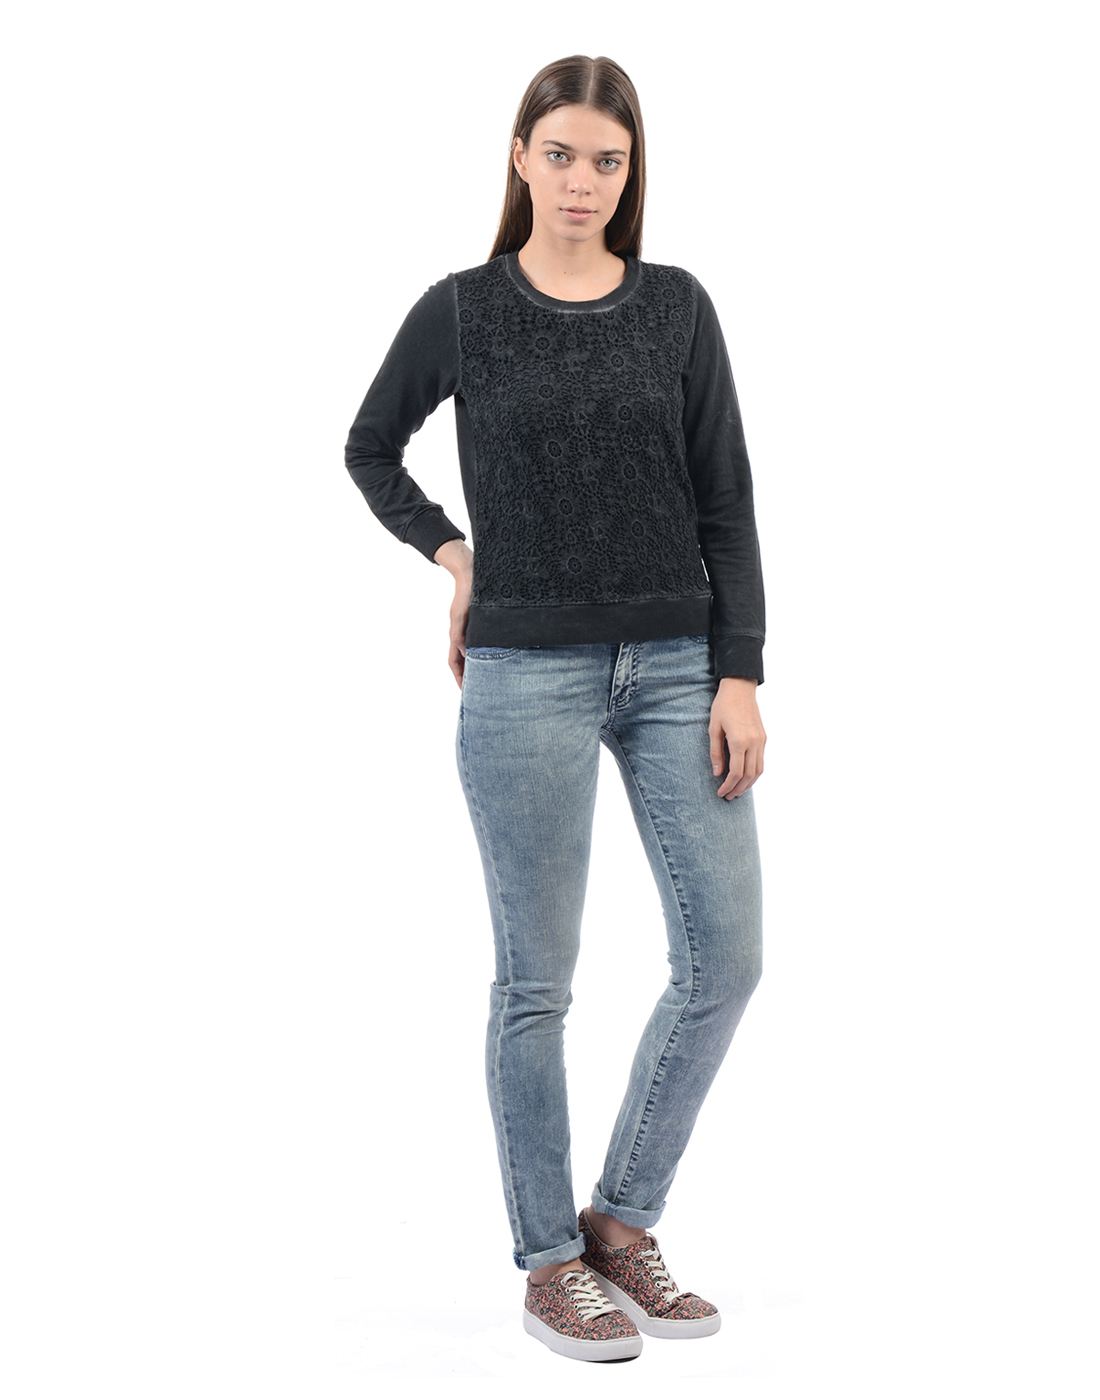 Pepe Jeans London Women Casual Wear Black Self Design Top